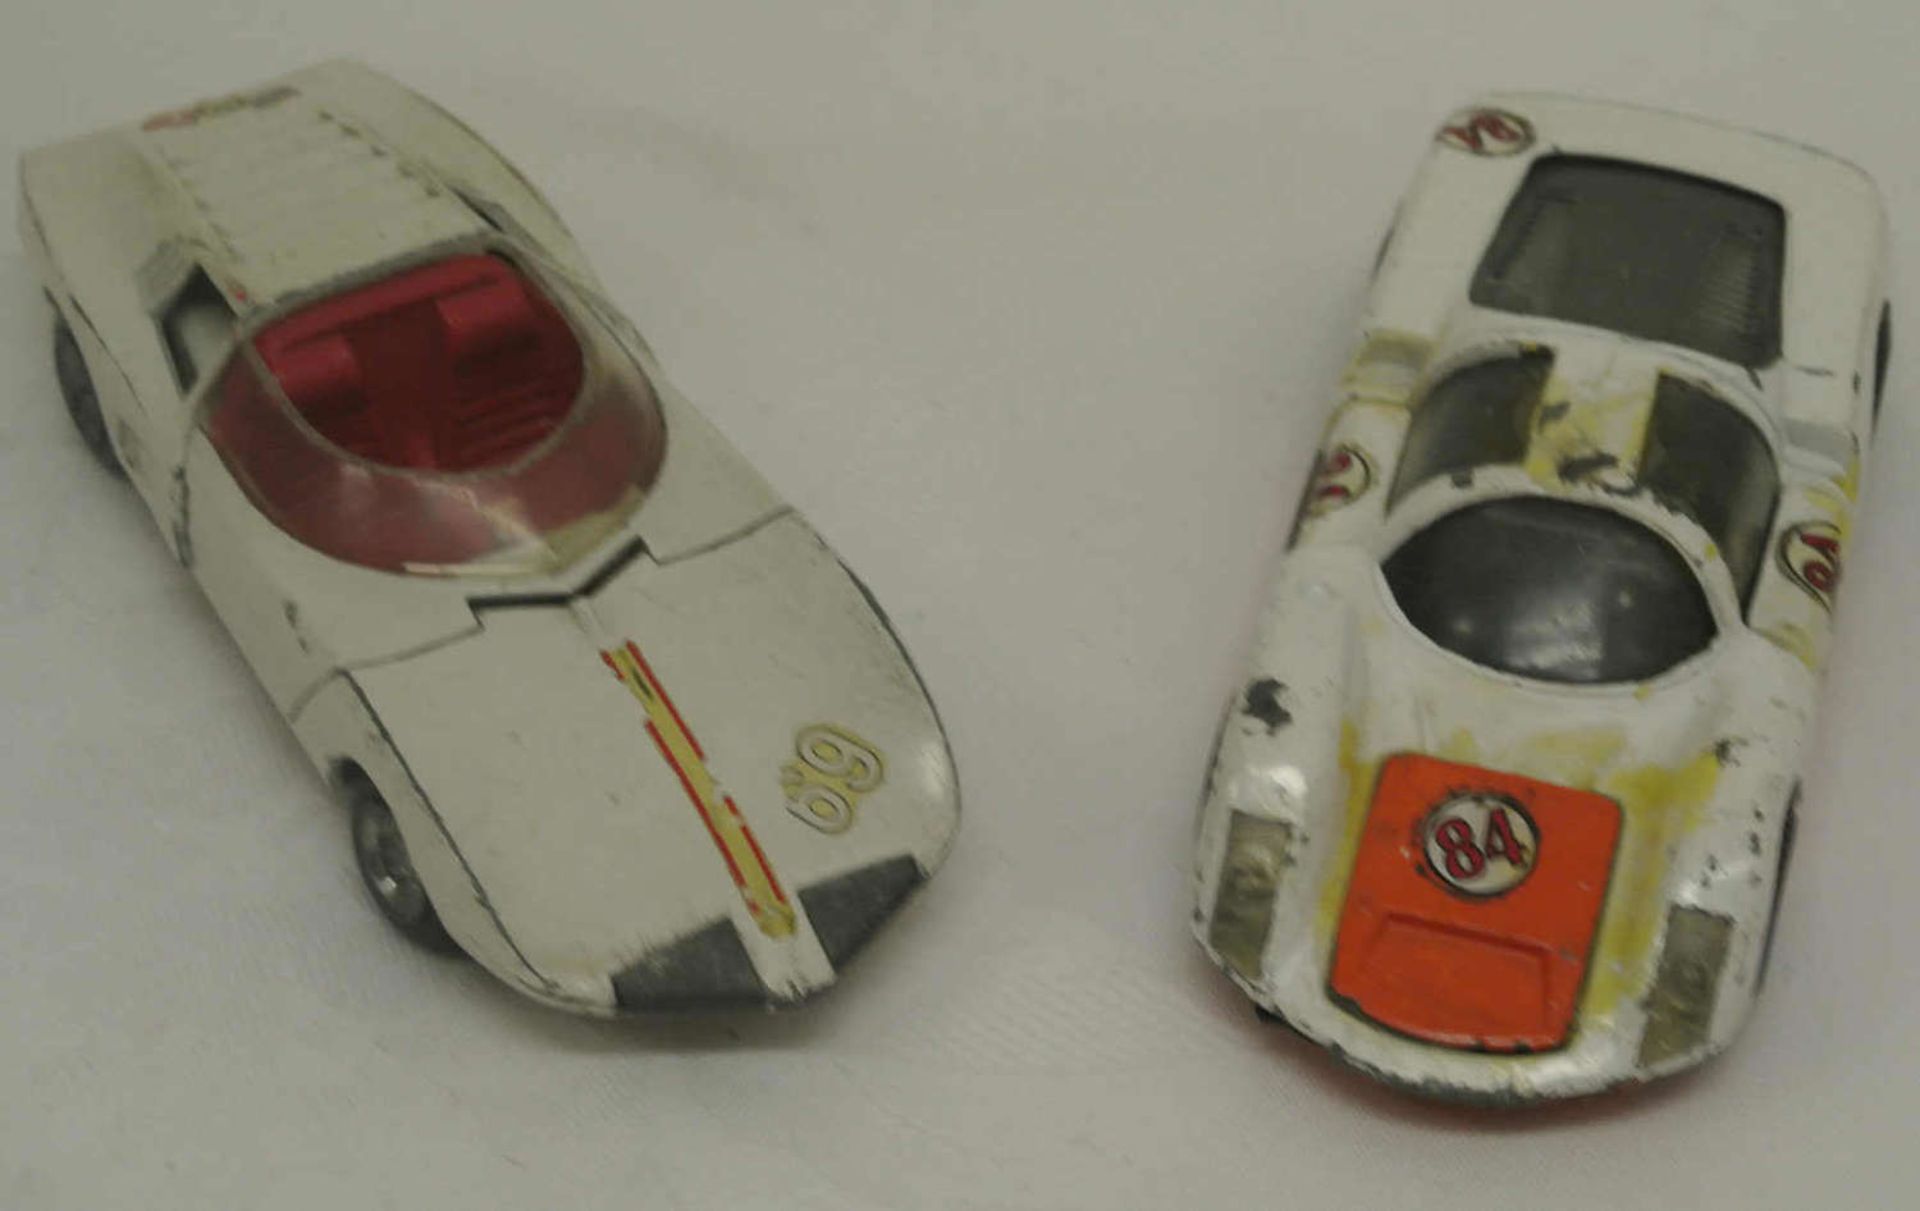 2 Modellautos, 1x Tekno, sowie 1x Mercury Italy (mit Aufkleber Import Märklin) 2 Modell cars, 1x